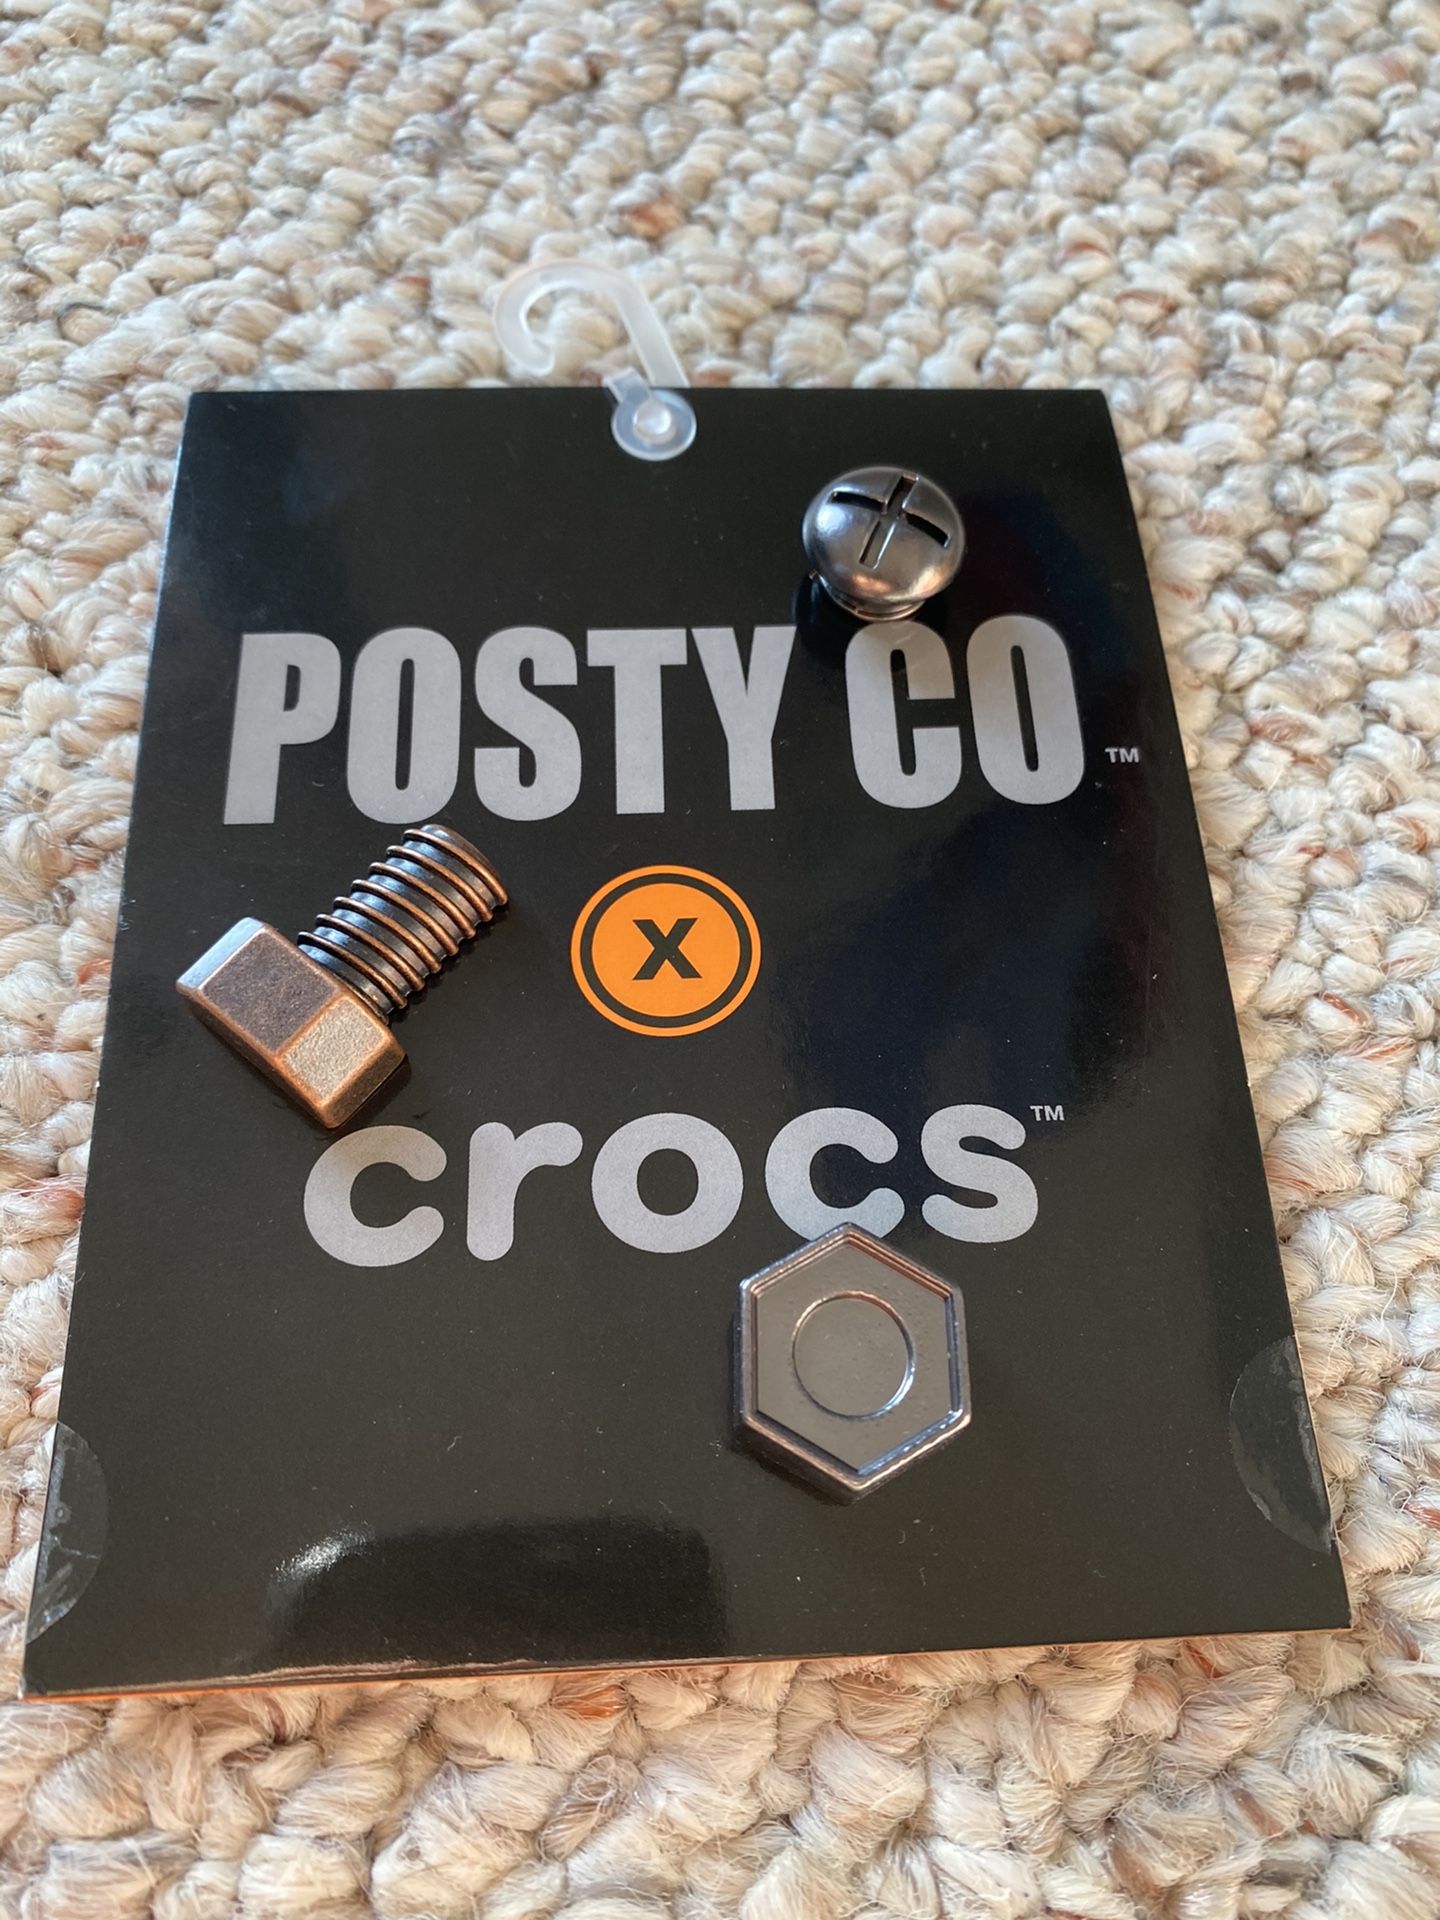 Post Malone X Crocs Scrap Metal 3 Pack Jibbitz Charms Posty Co - New